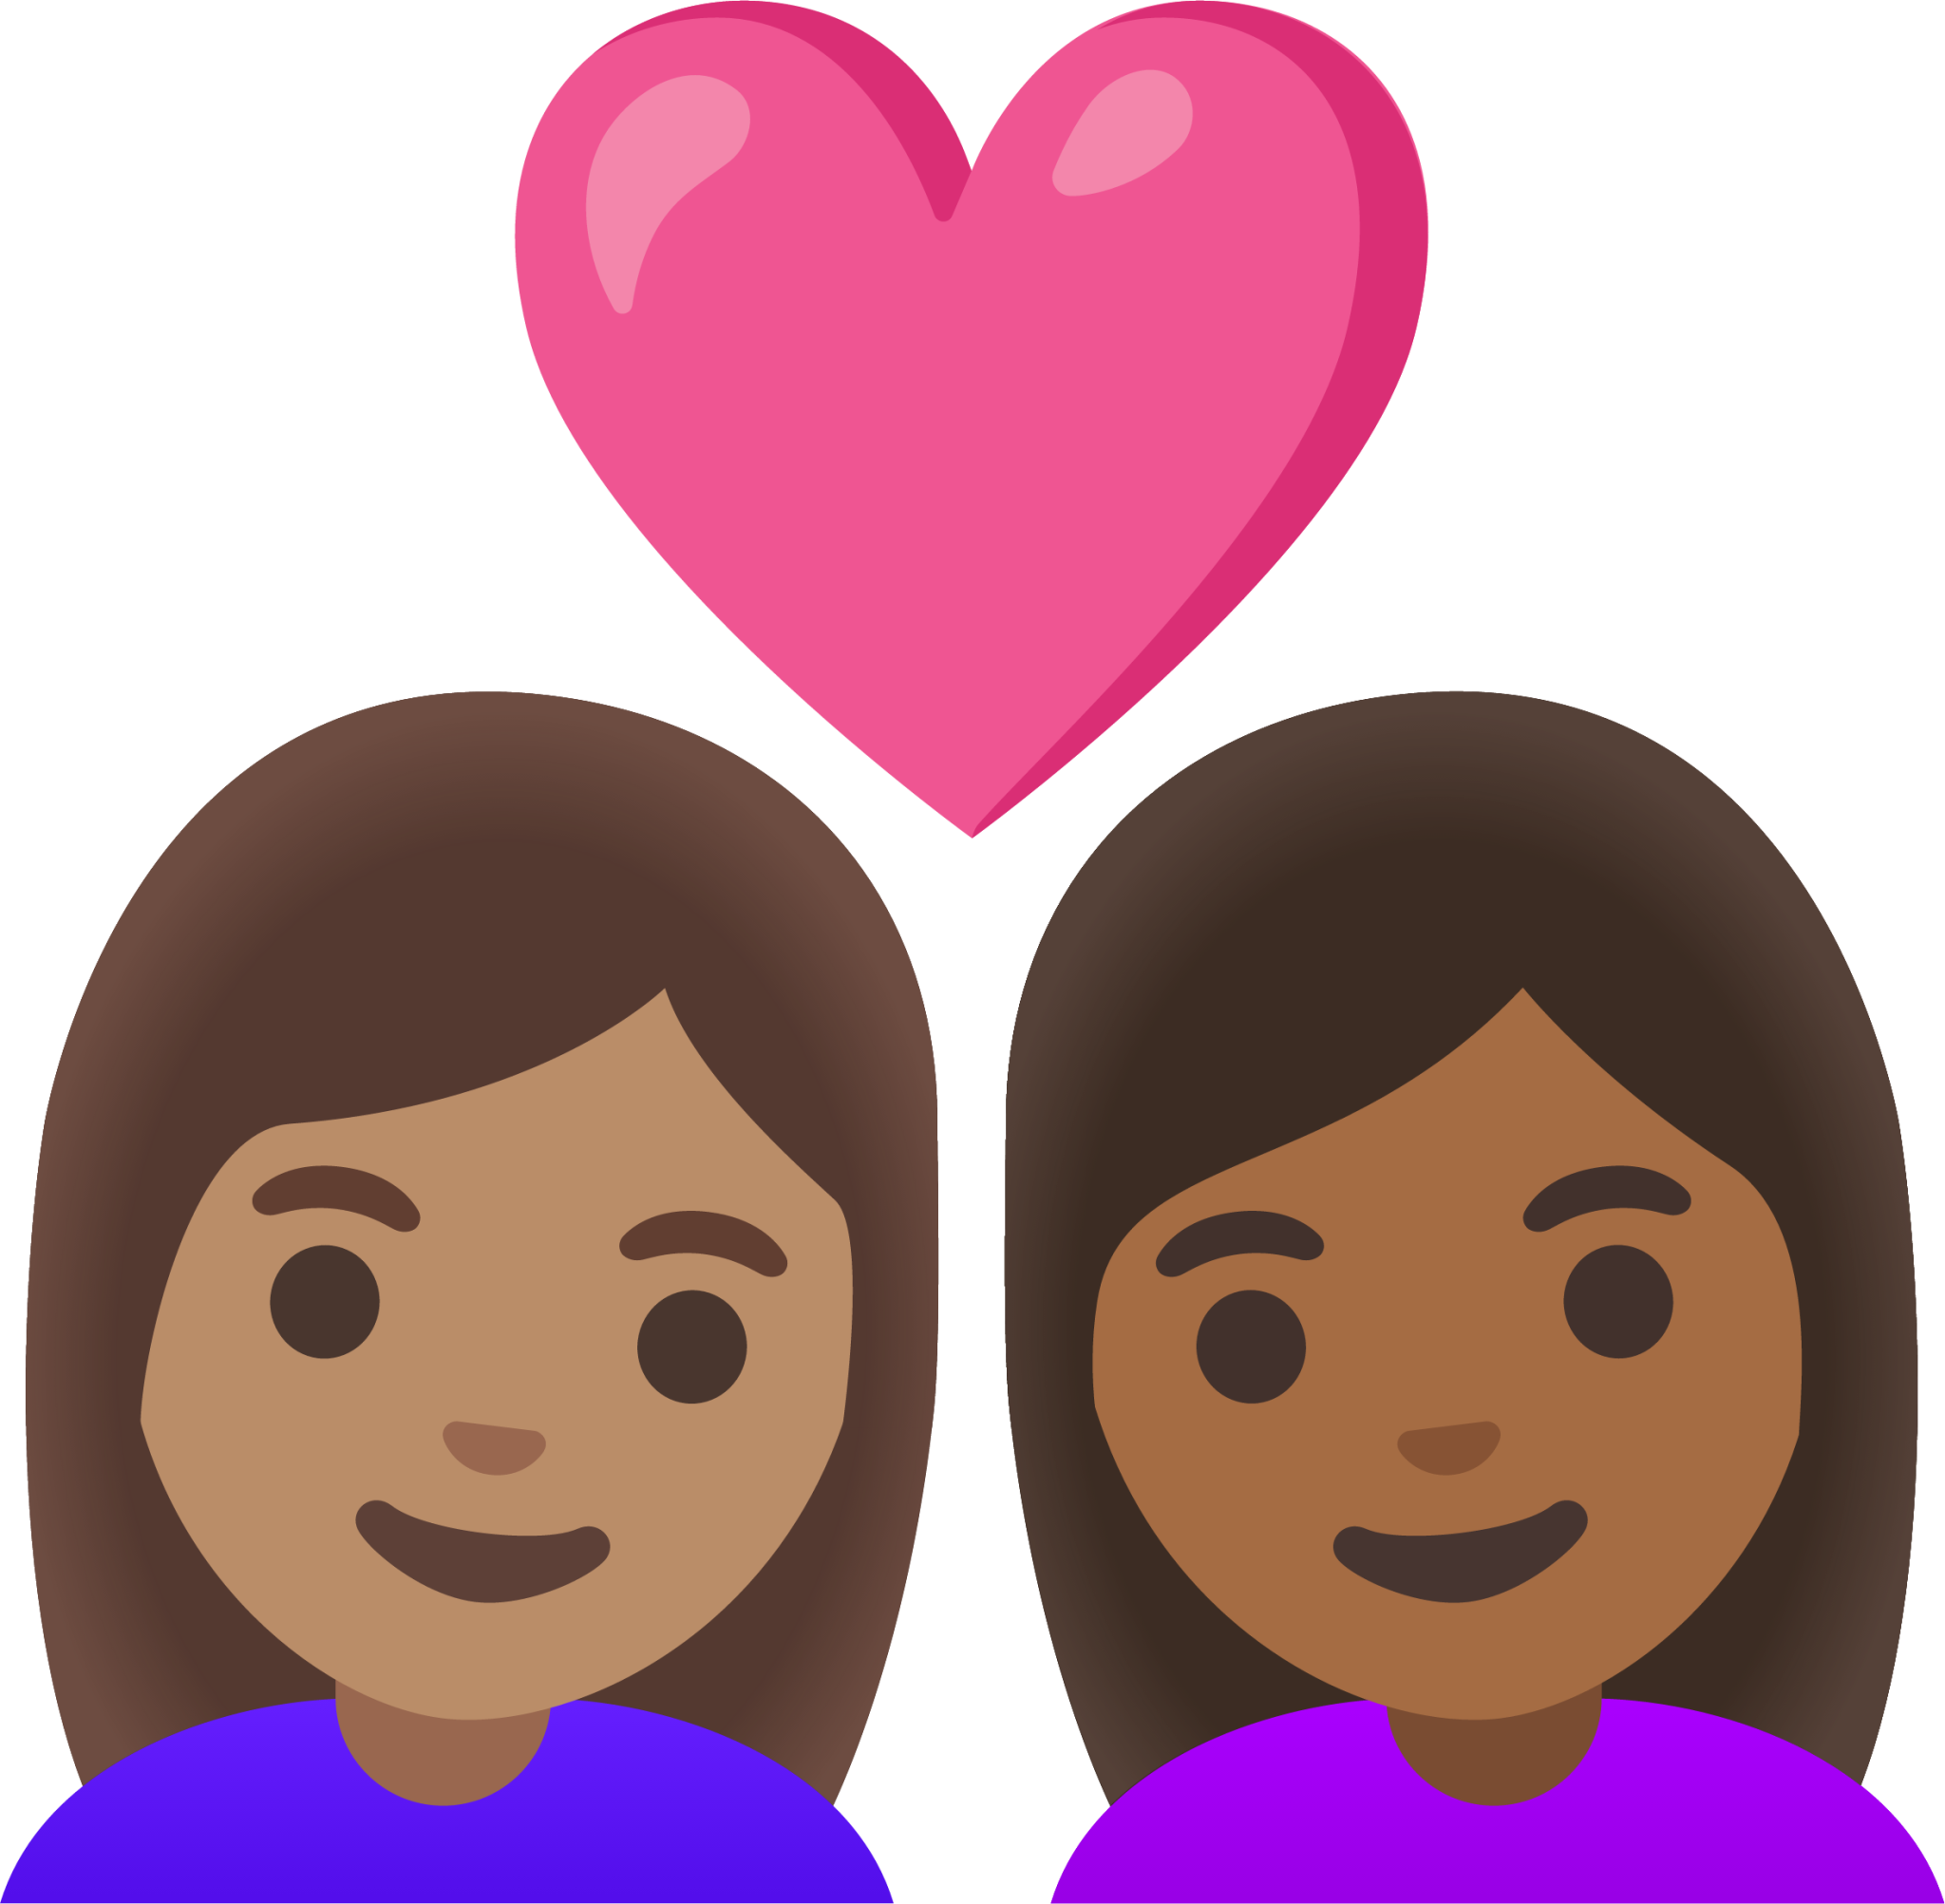 couple with heart: woman, woman, medium skin tone, medium-dark skin tone emoji